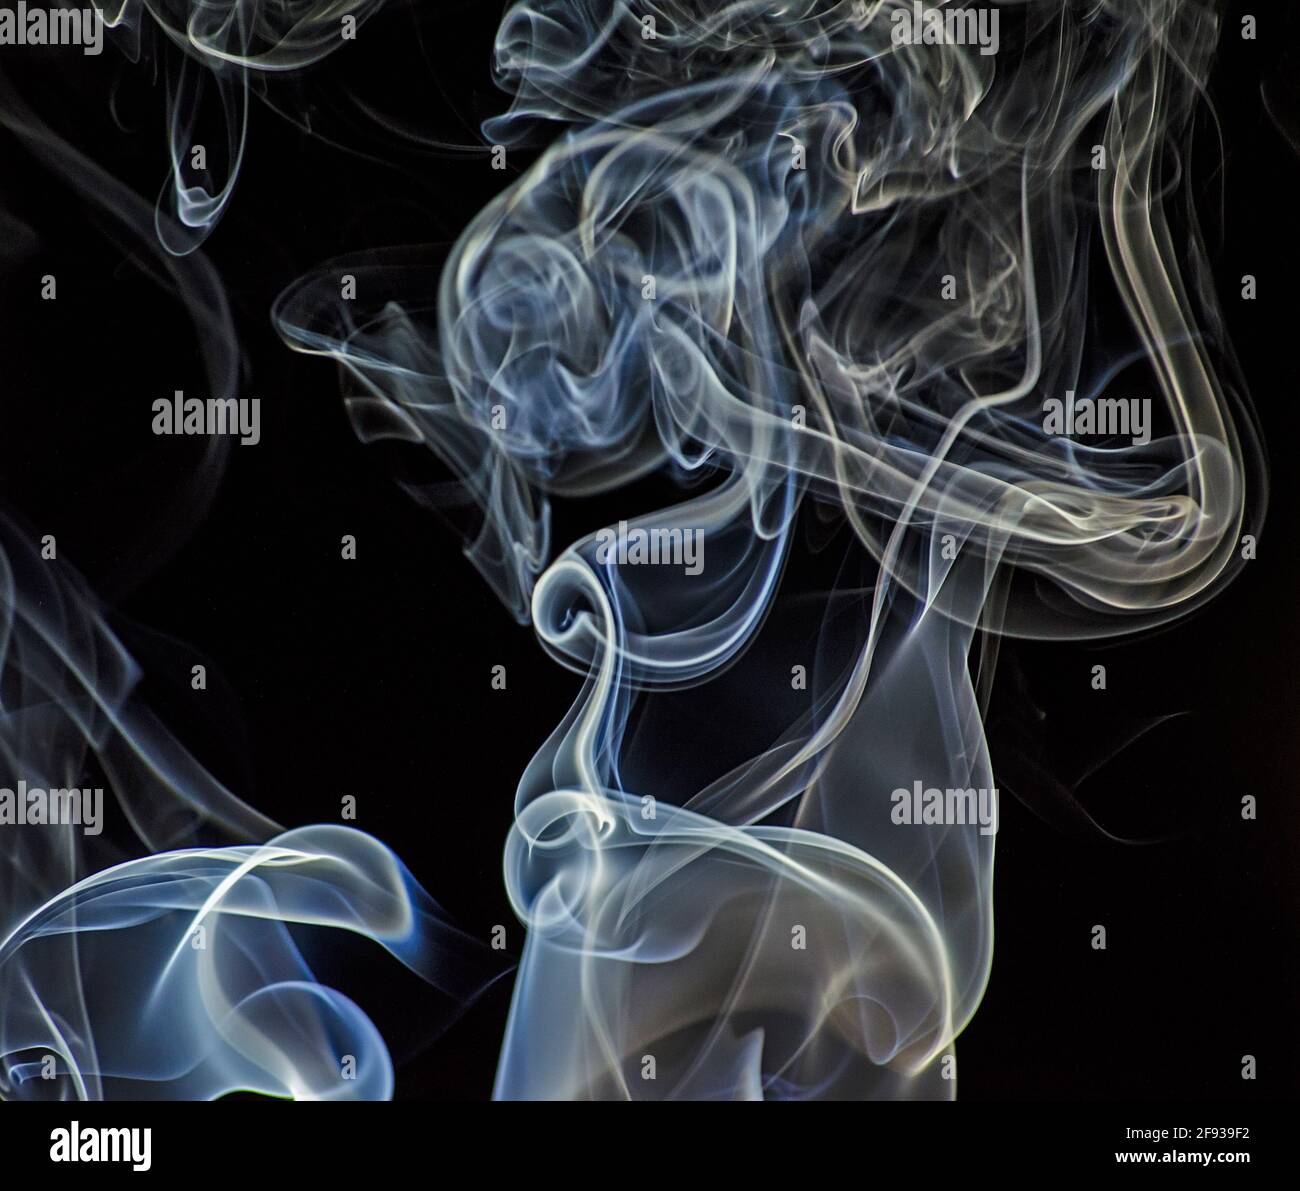 clubbing smoke on a black background Stock Photo